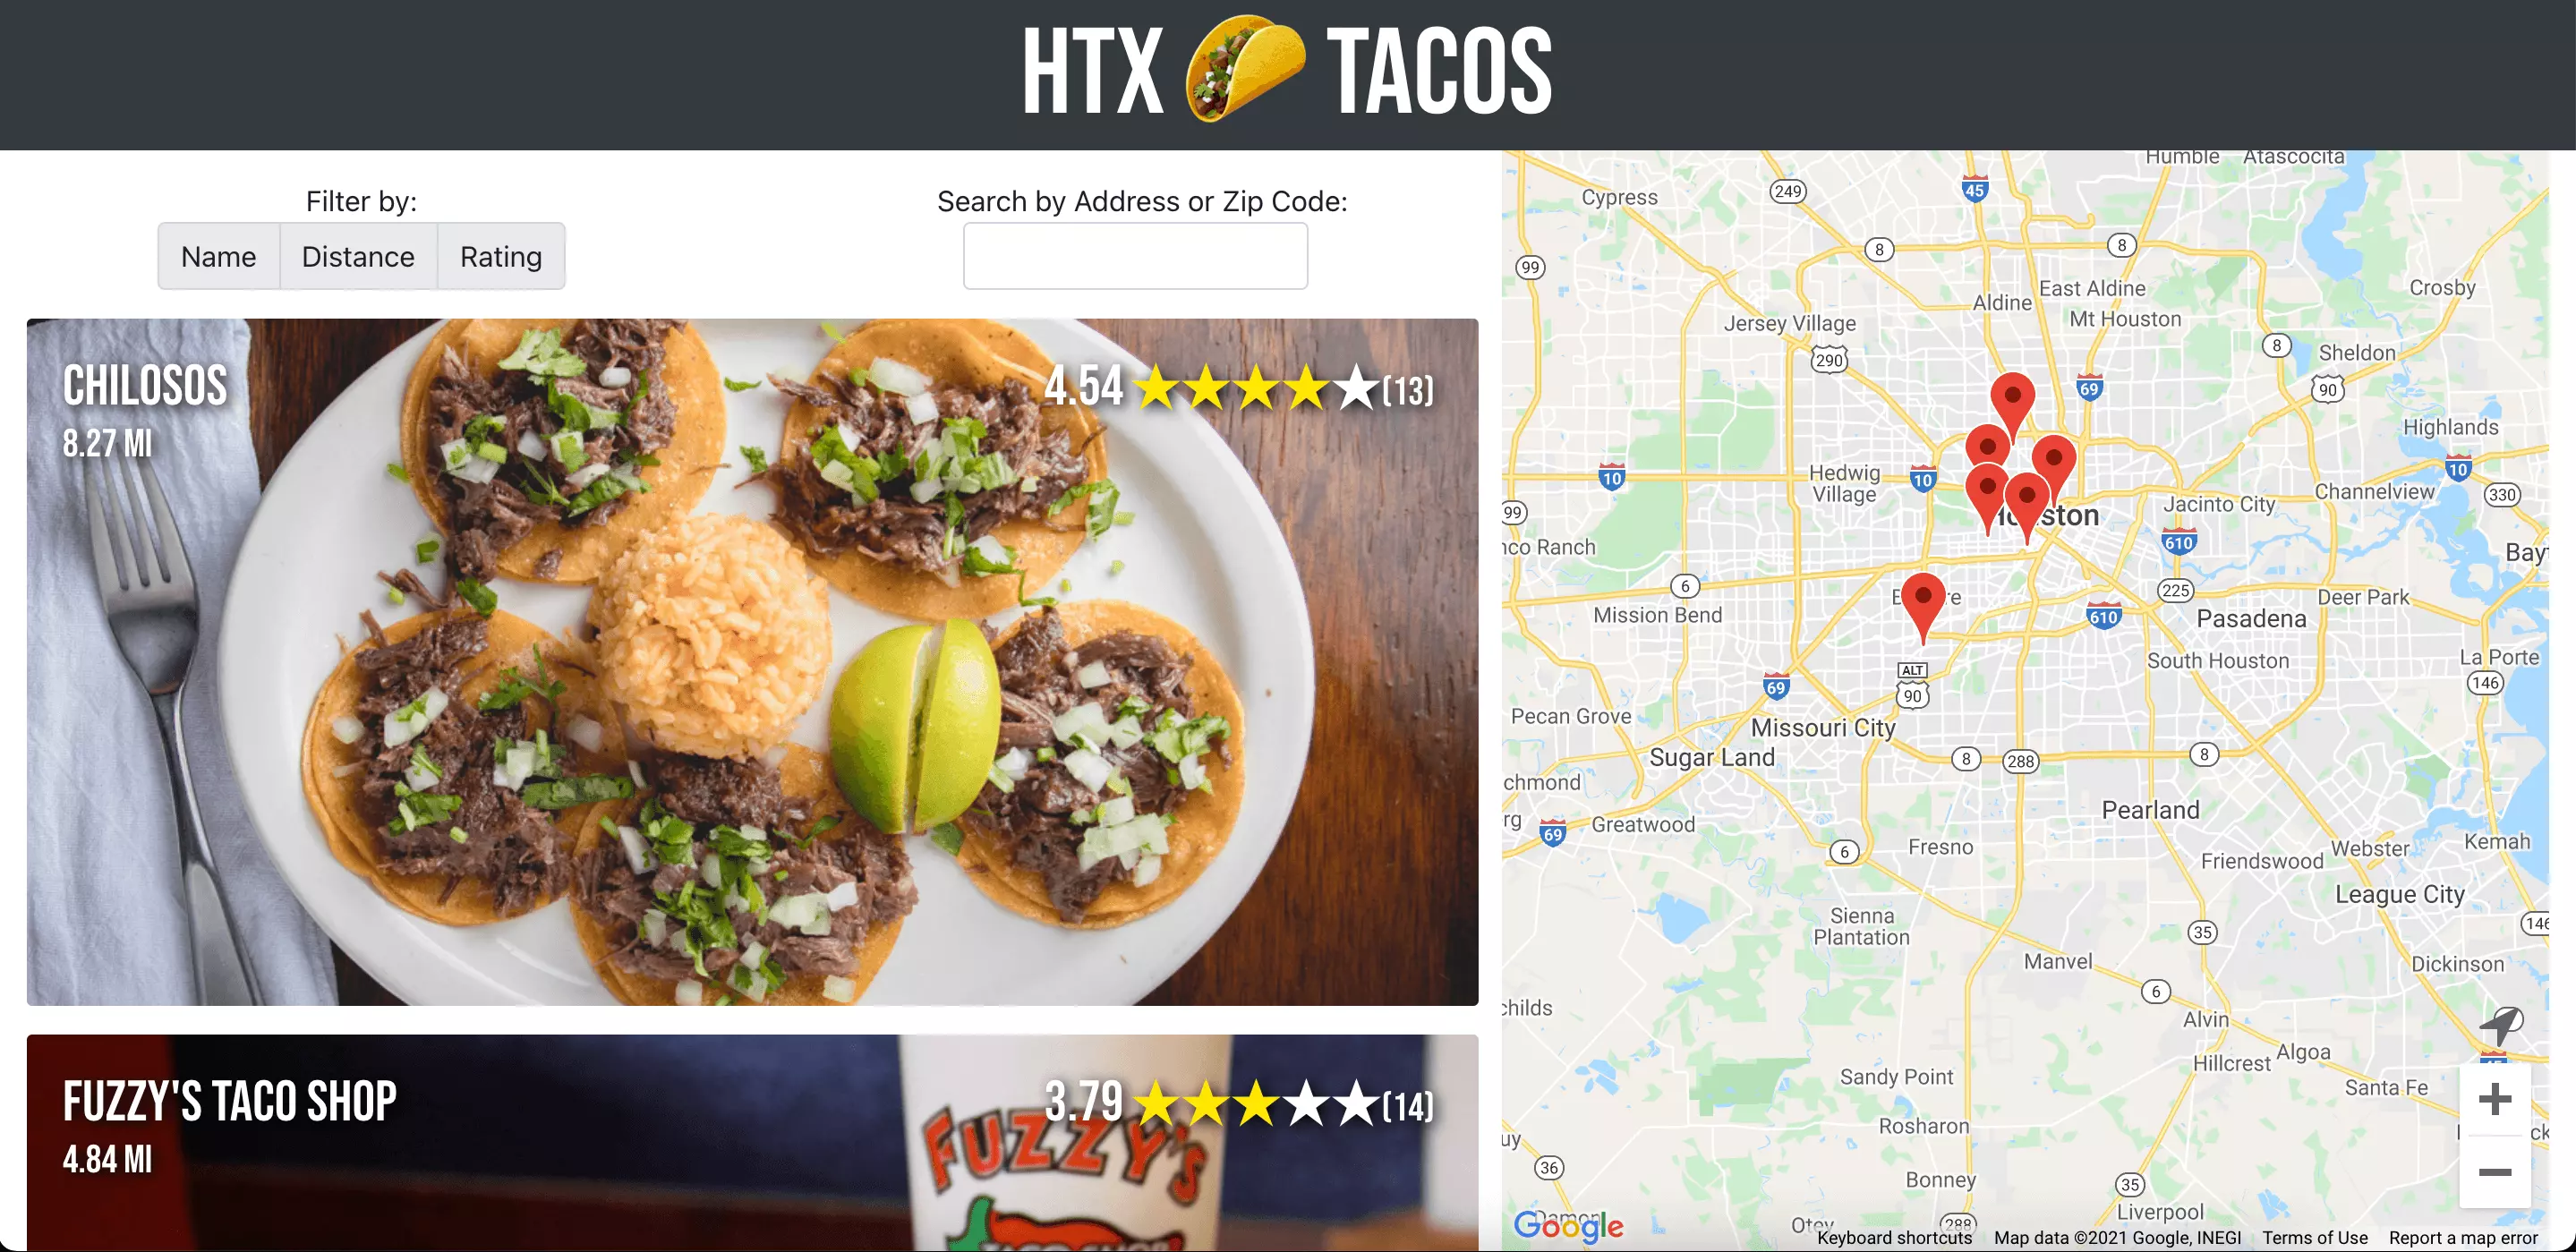 HTX Tacos web application screenshot